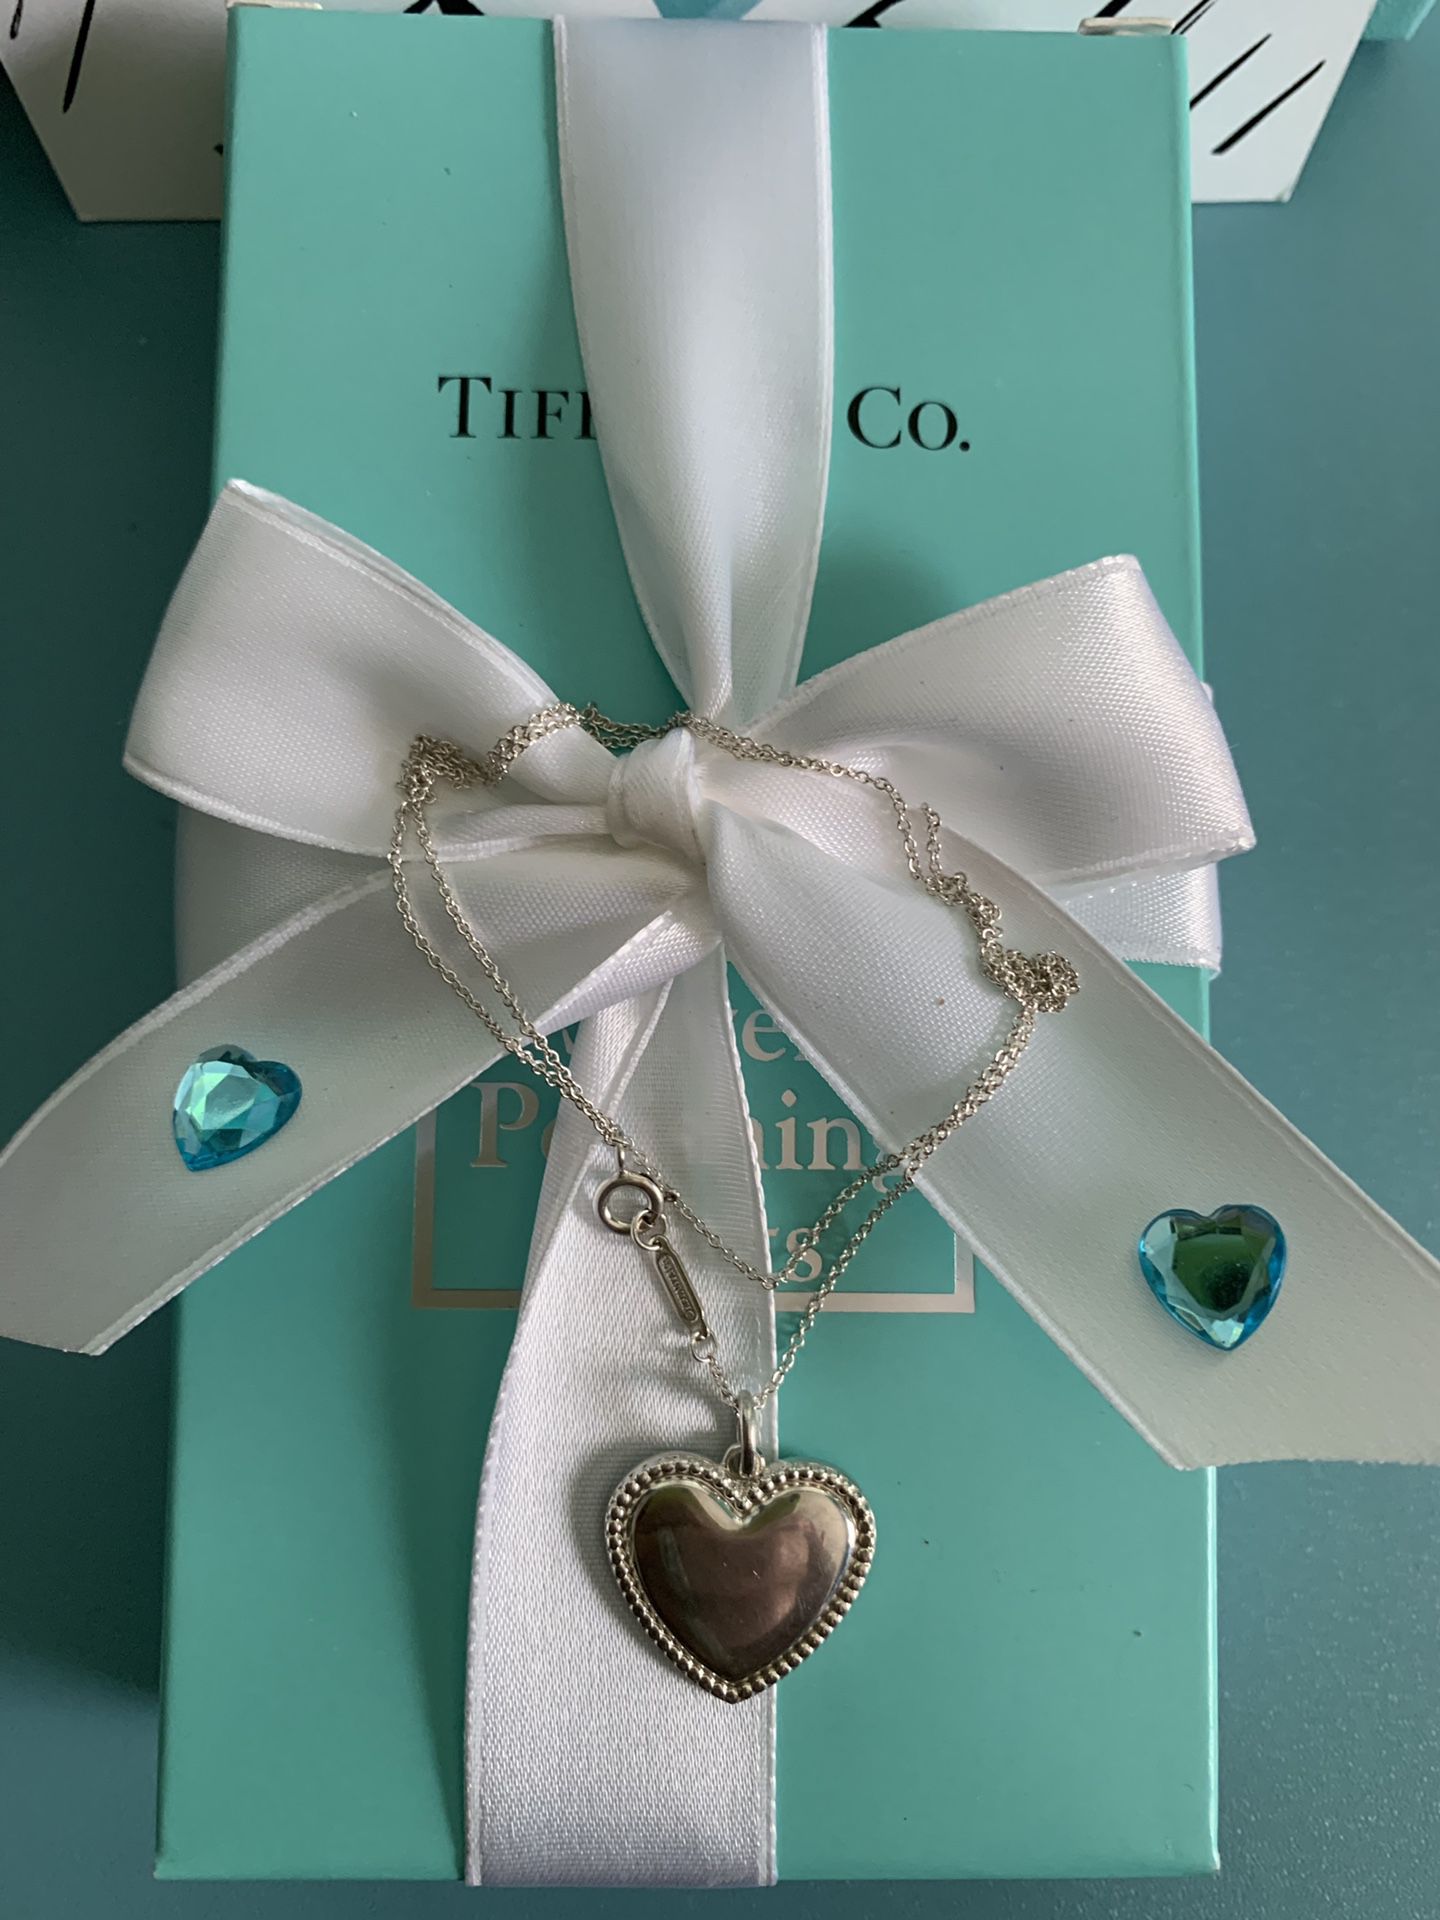 Tiffany & Co heart pendant necklaces